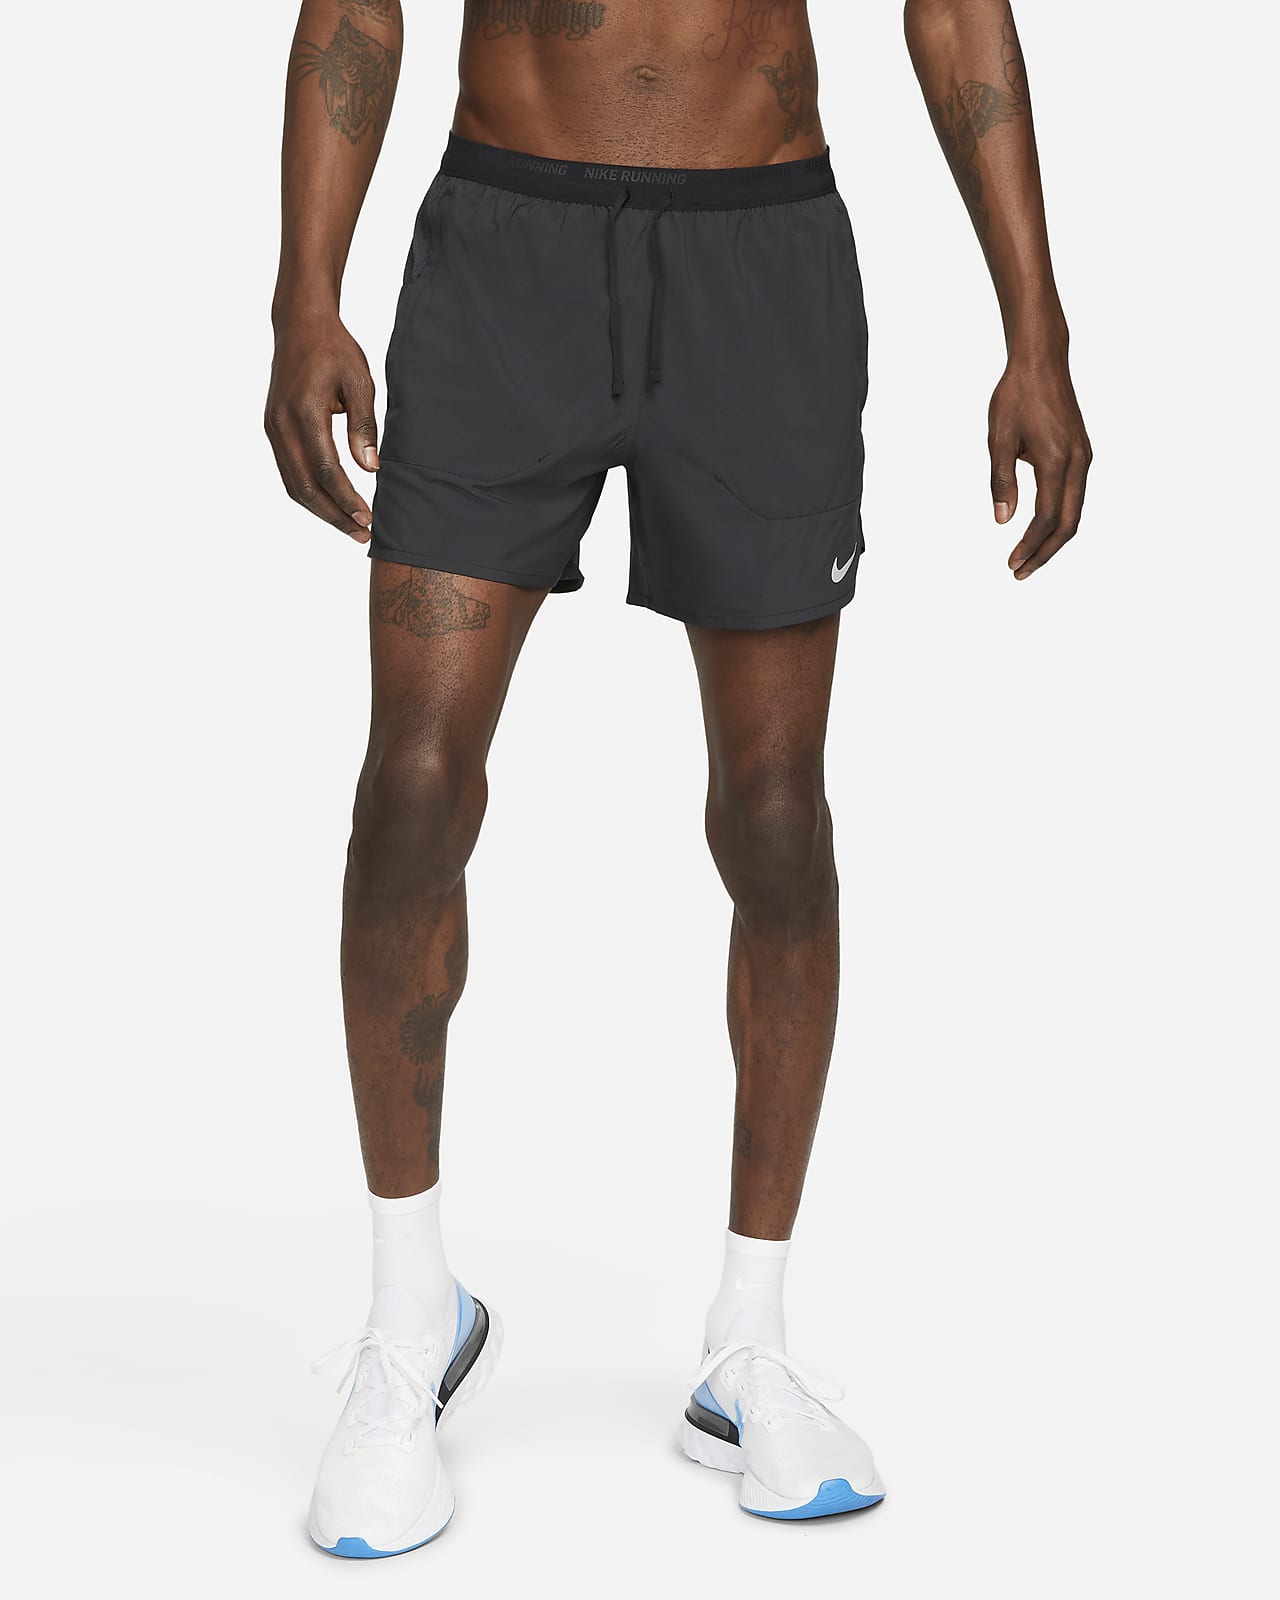 Solicitud novato Mount Bank Shorts de running con forro de ropa interior Dri-FIT de 12.5 cm para hombre  Nike Stride. Nike MX